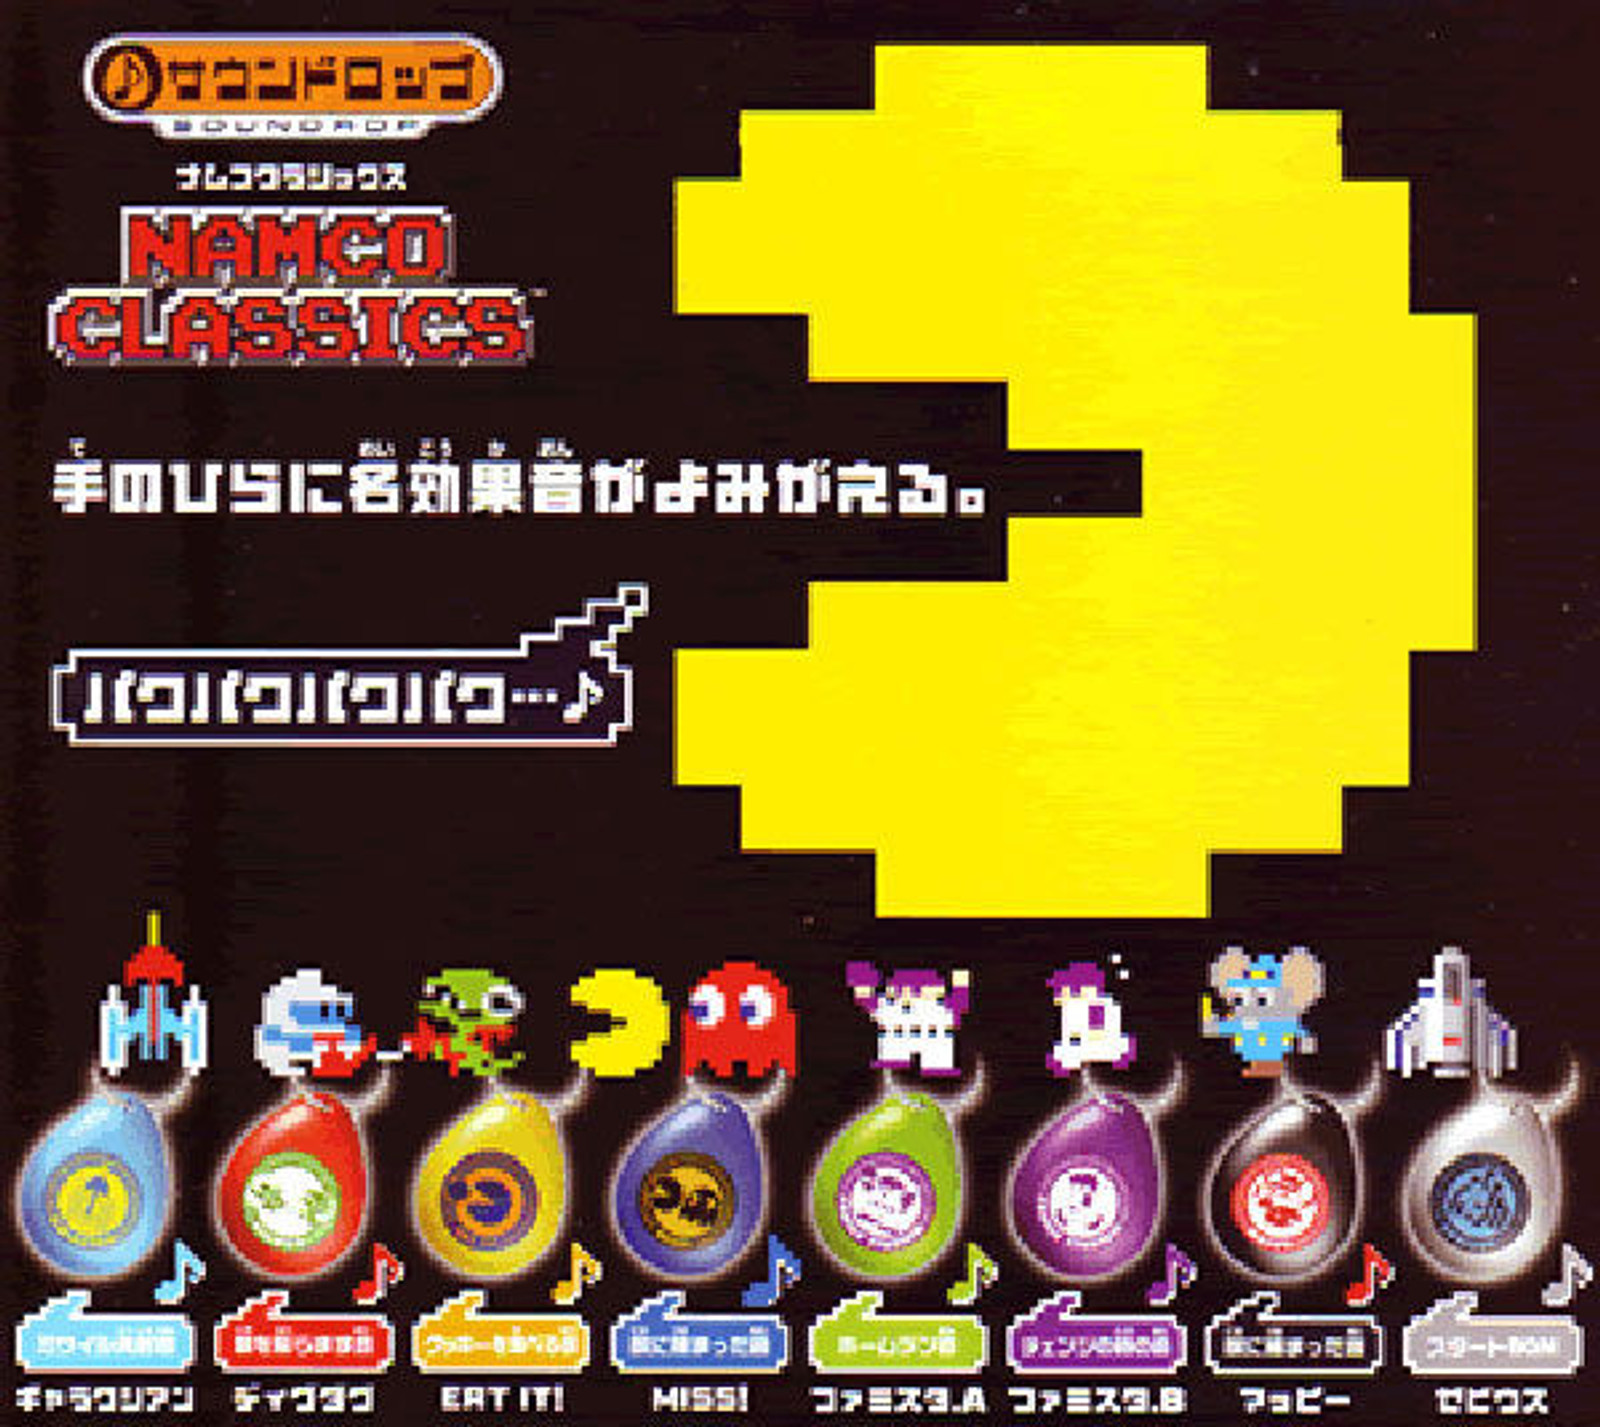 Complete set of Namco Classics Soundrop Ball Chain Bandai JAPAN GAME